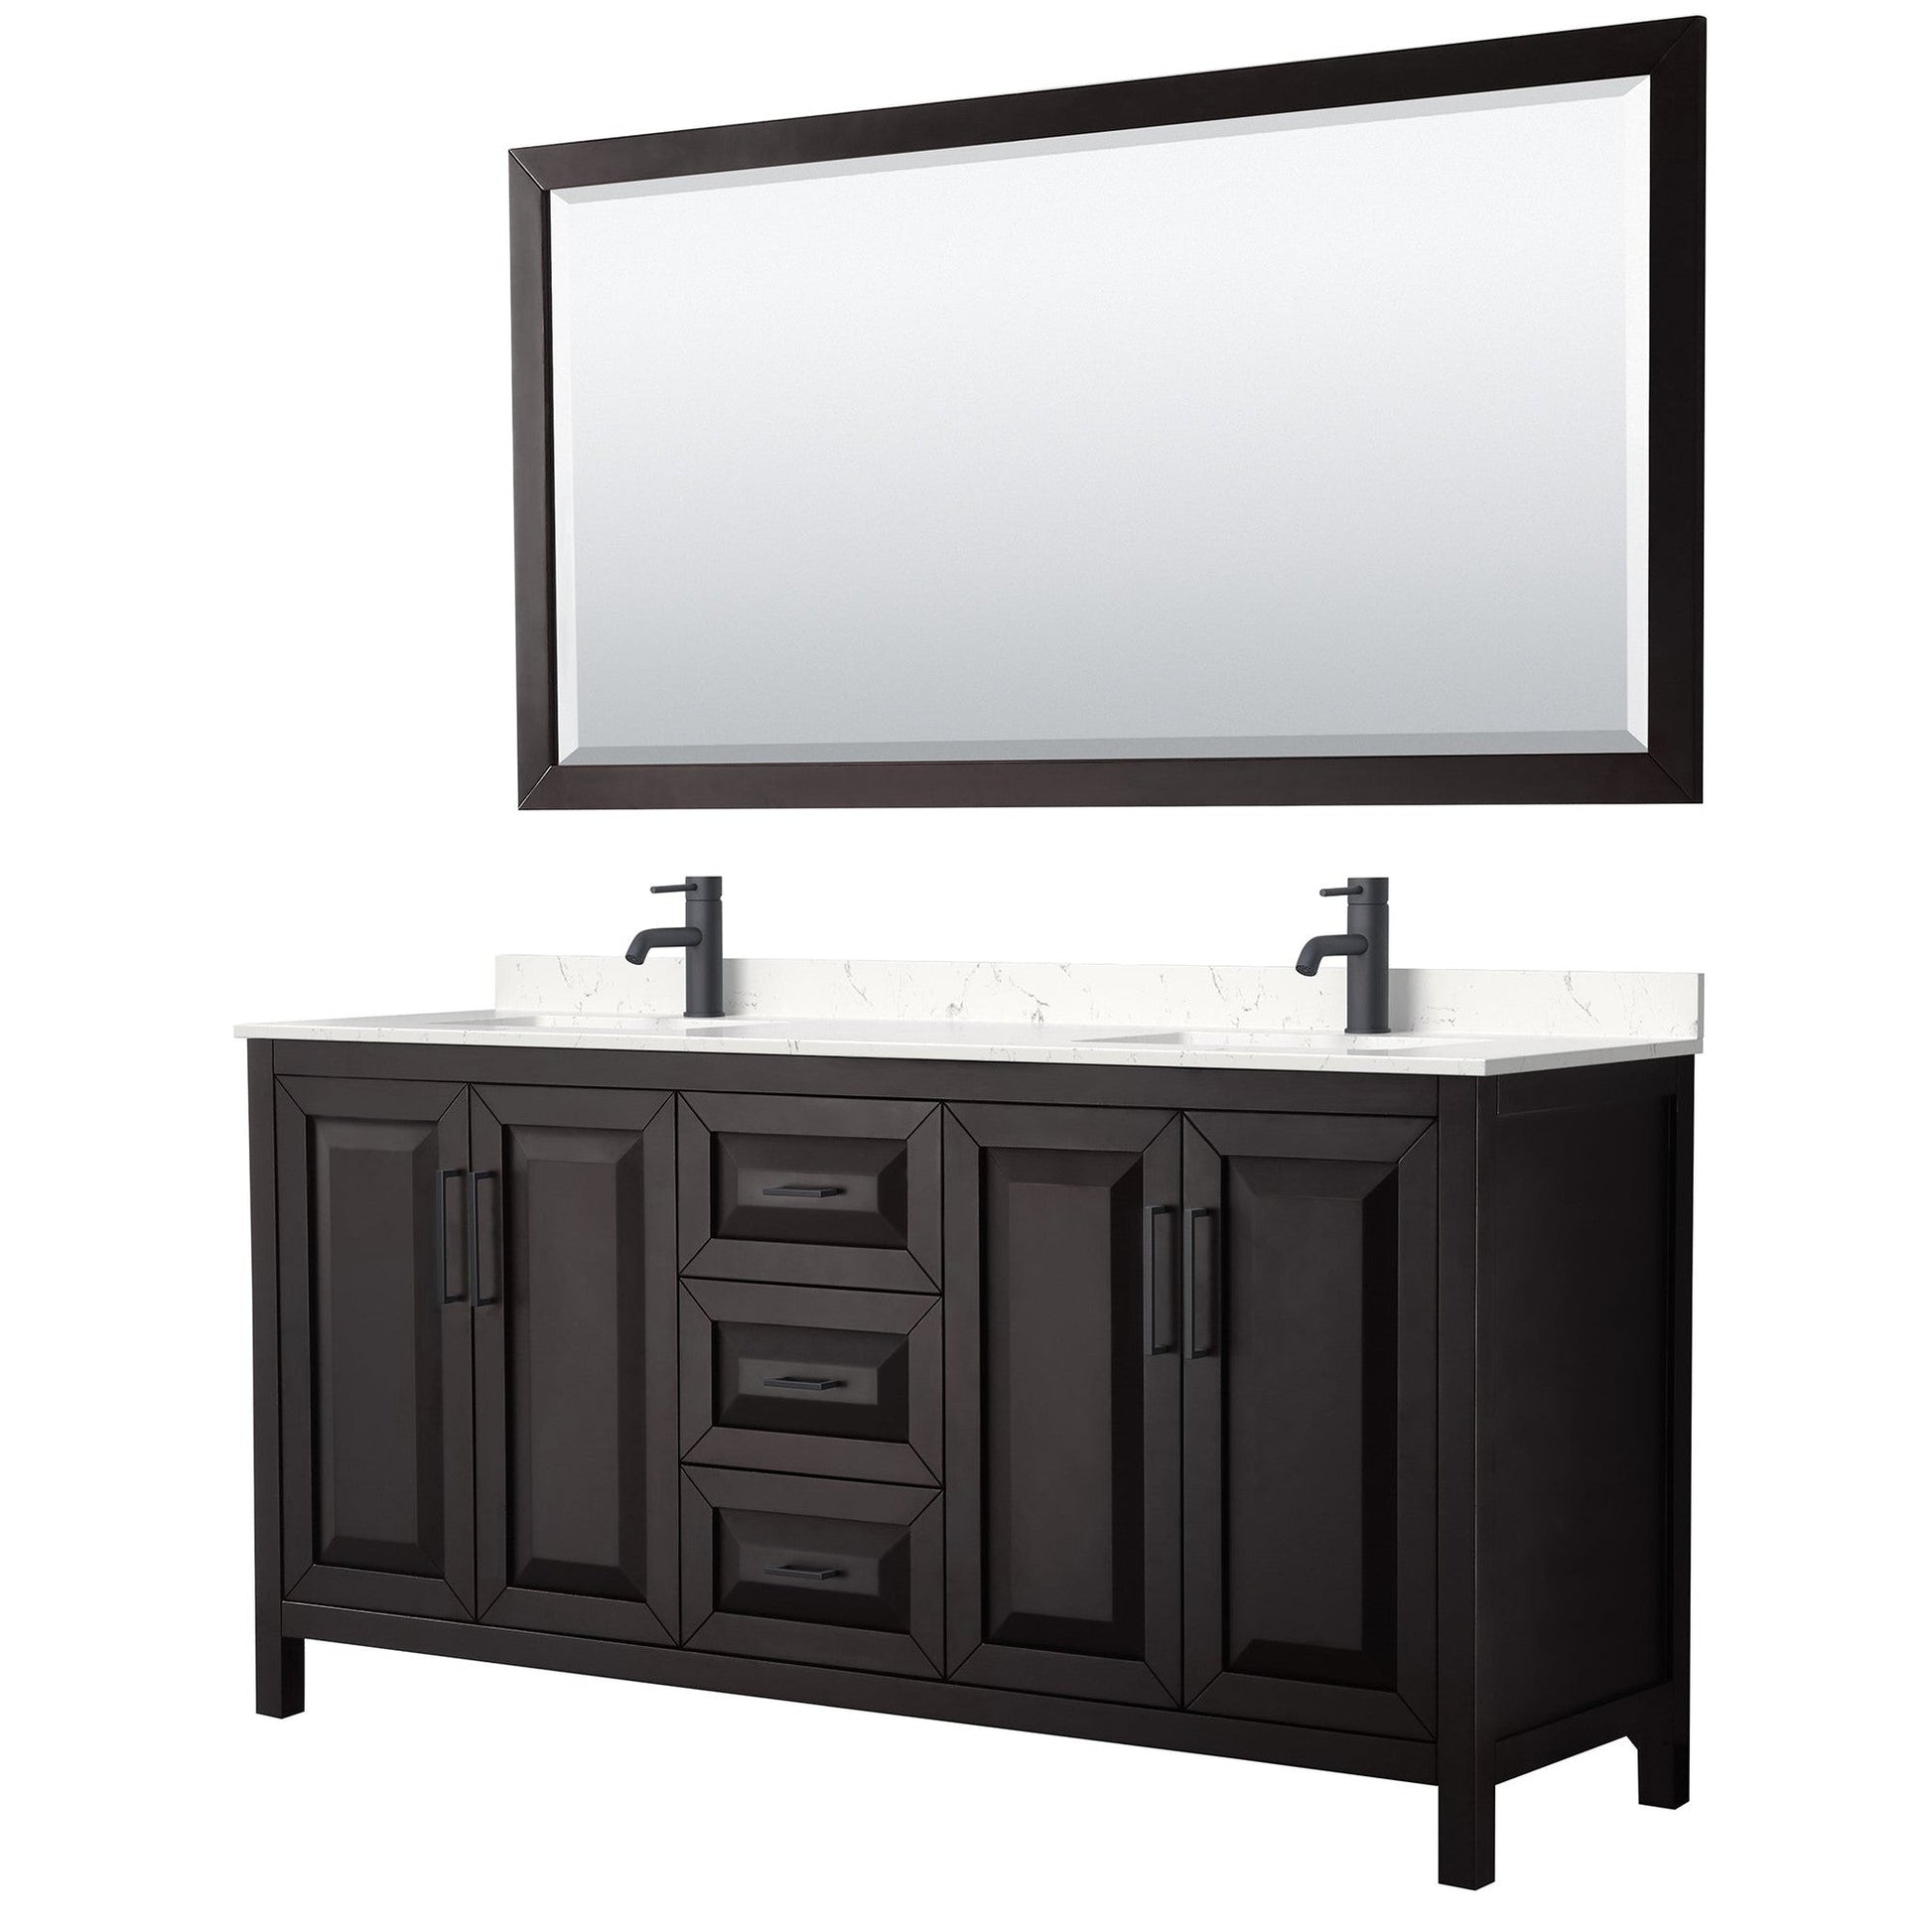 Daria 72" Double Bathroom Vanity in Dark Espresso, Carrara Cultured Marble Countertop, Undermount Square Sinks, Matte Black Trim, 70" Mirror